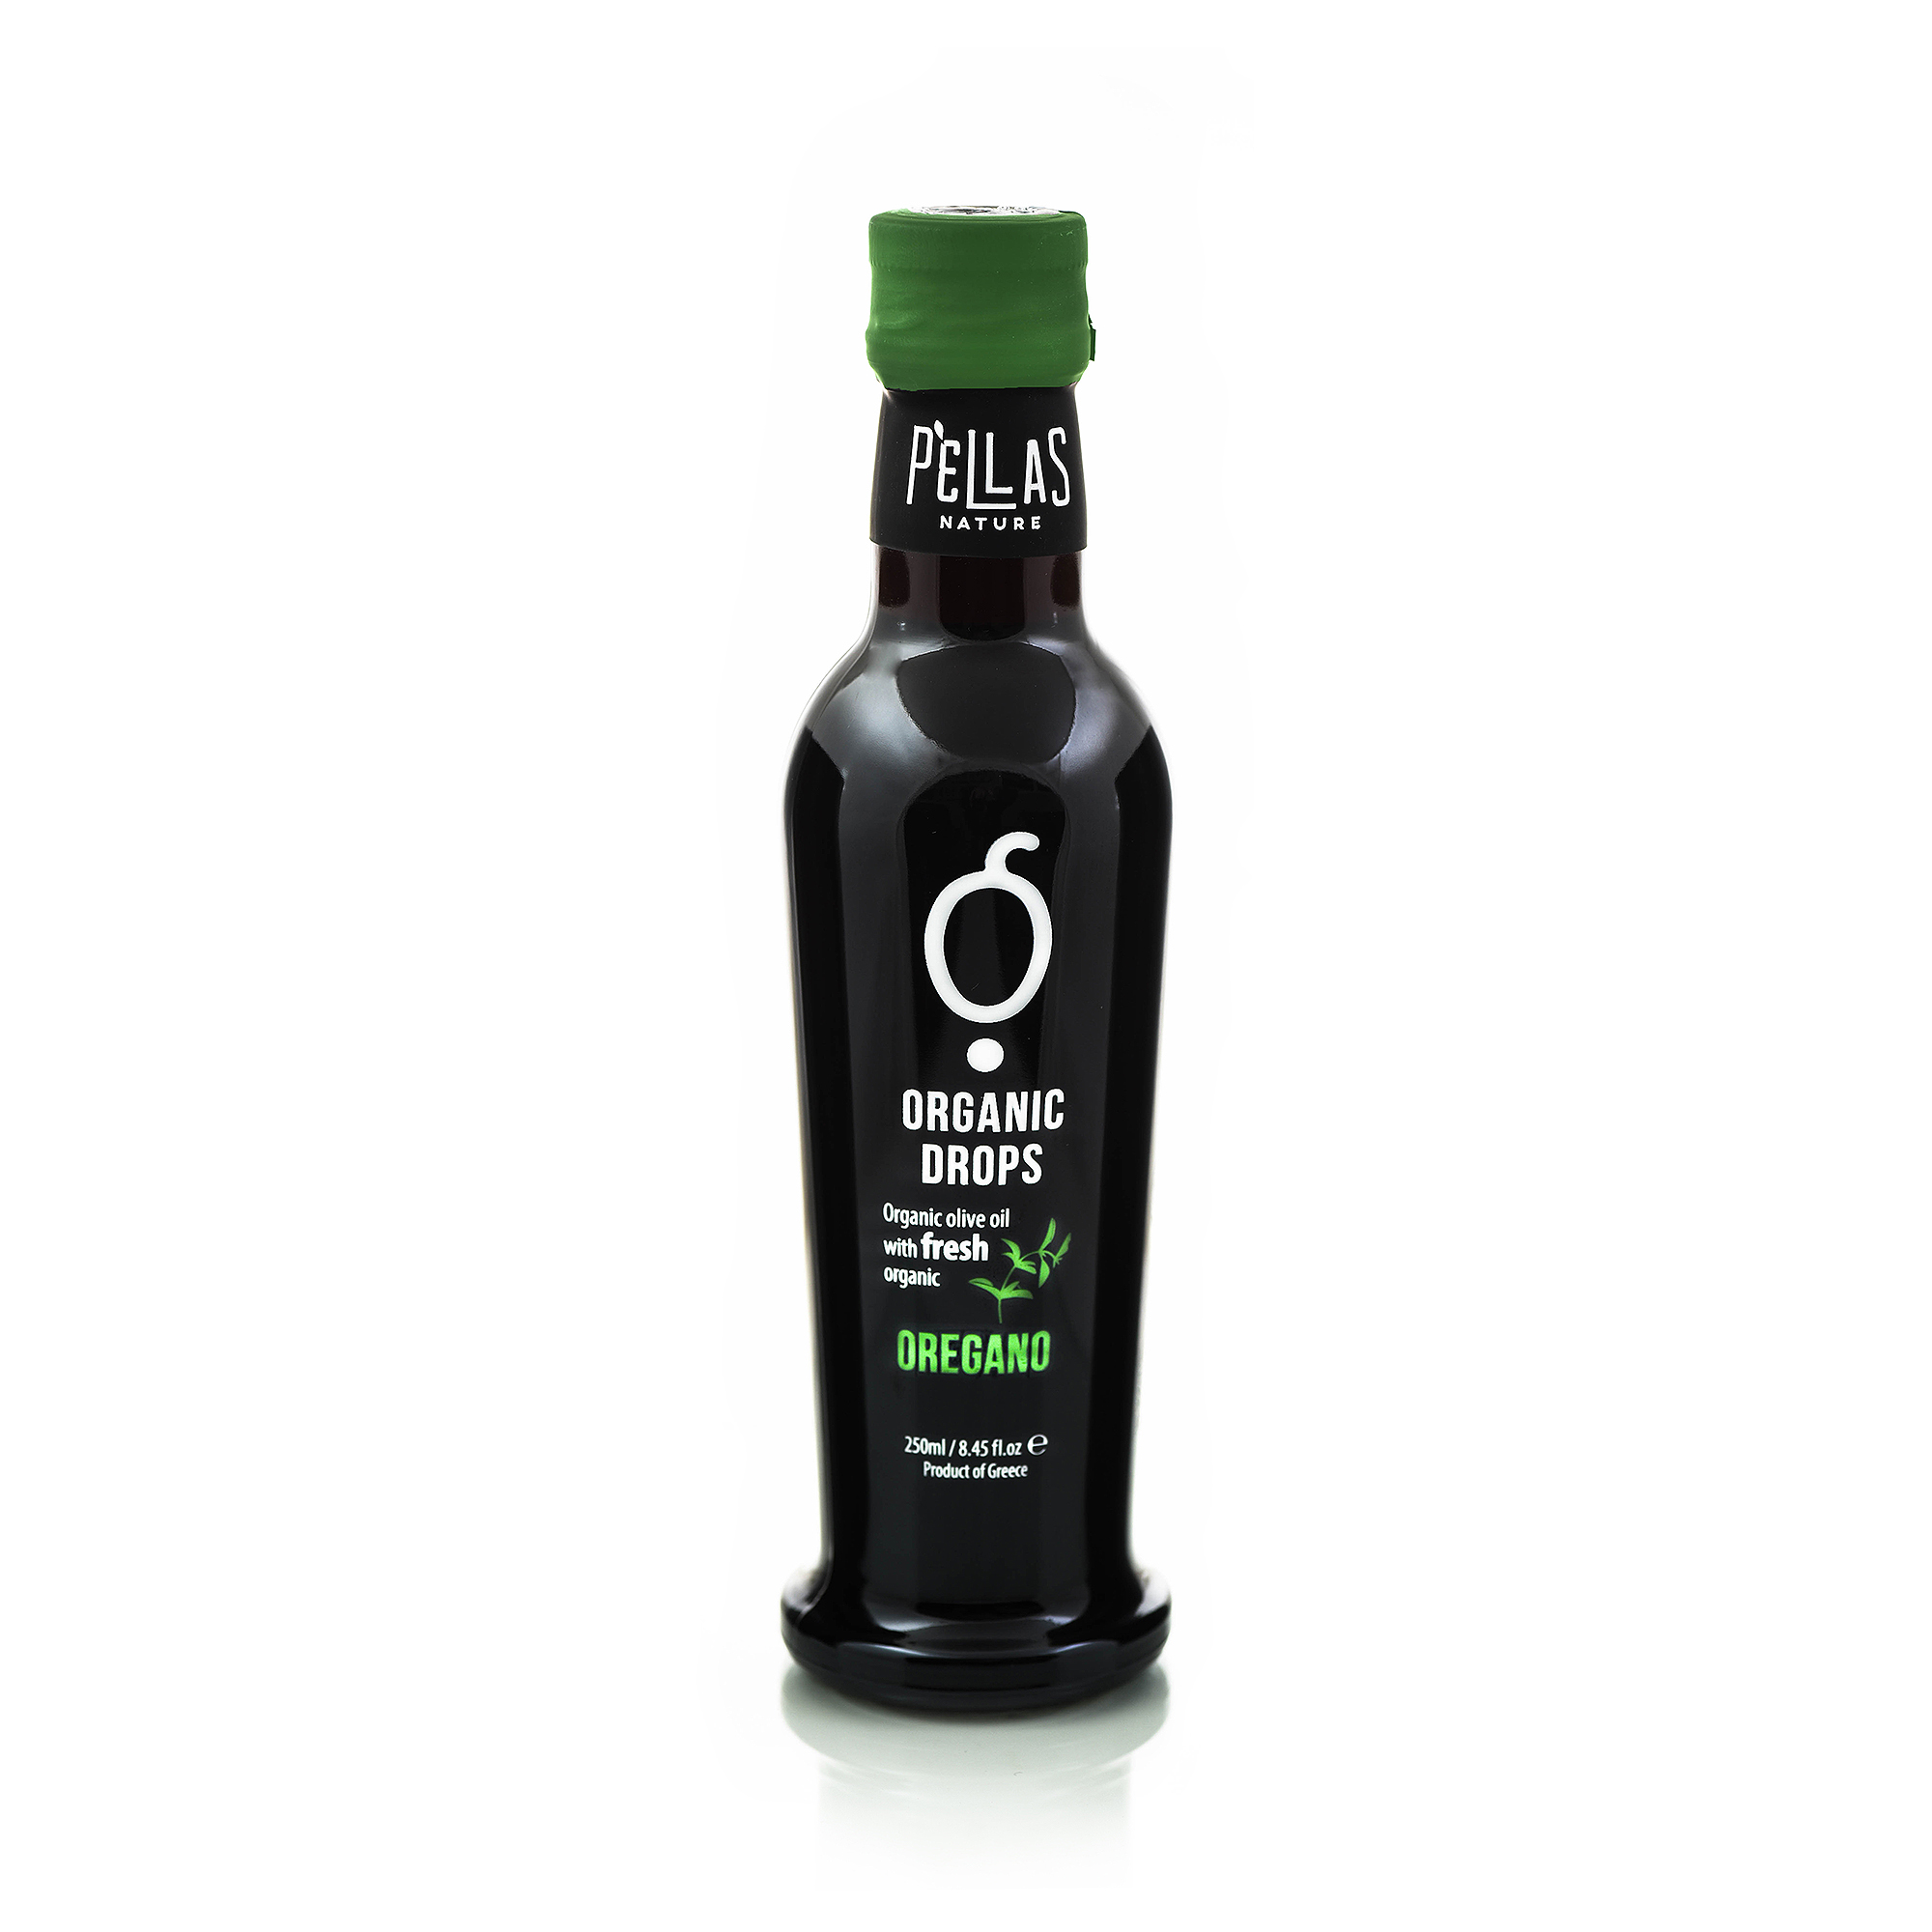 Organic Drops Oregano Olive Oil 8.45 oz Bottle